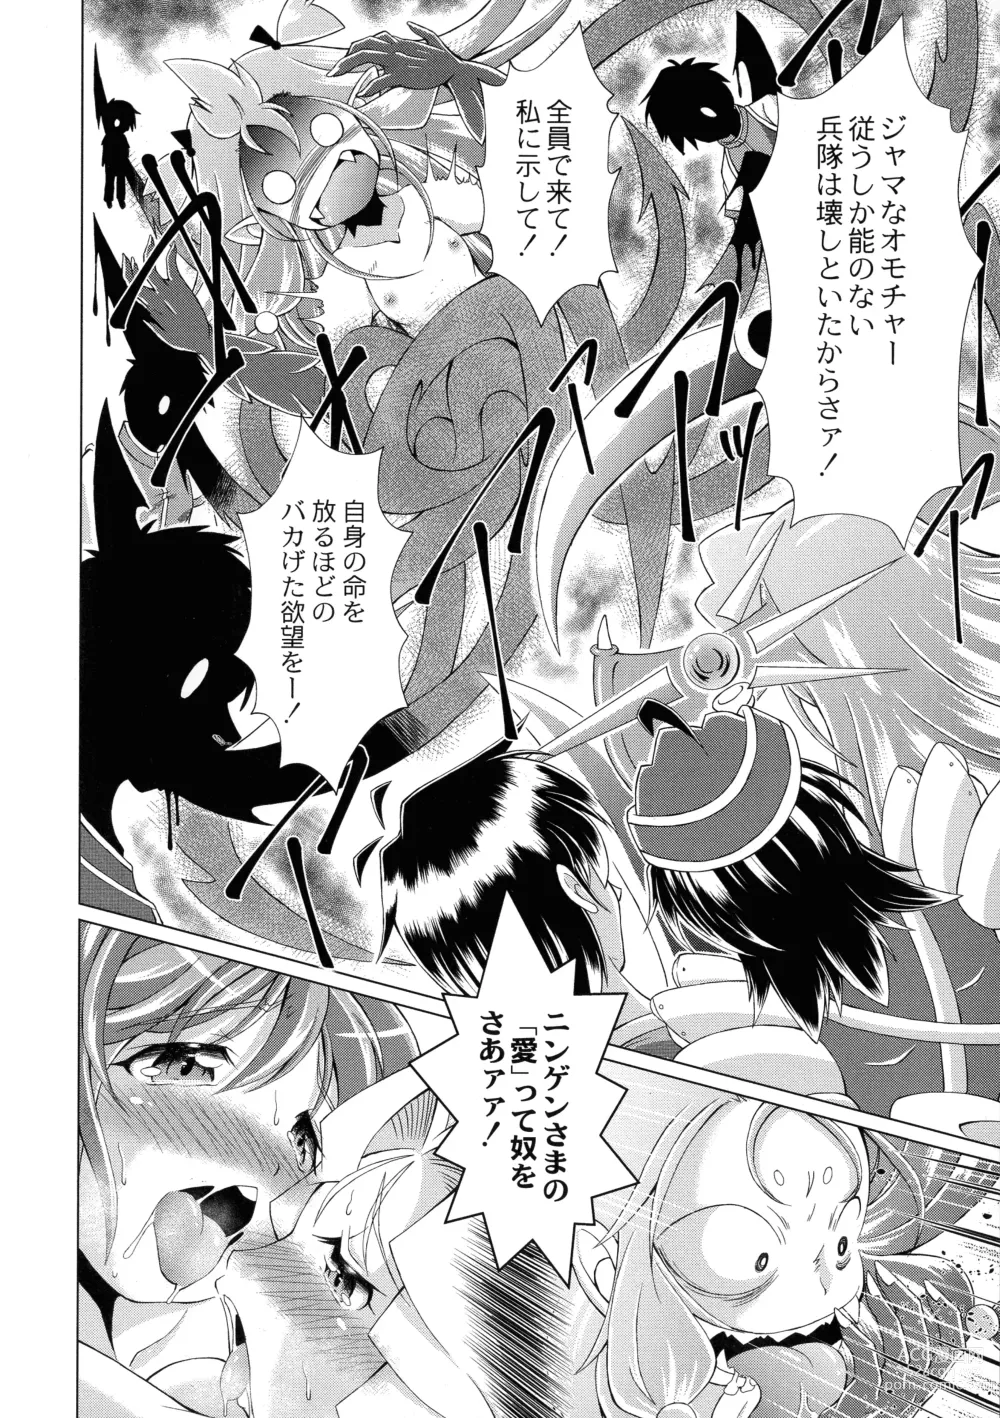 Page 198 of manga Magical Canaan Reboot